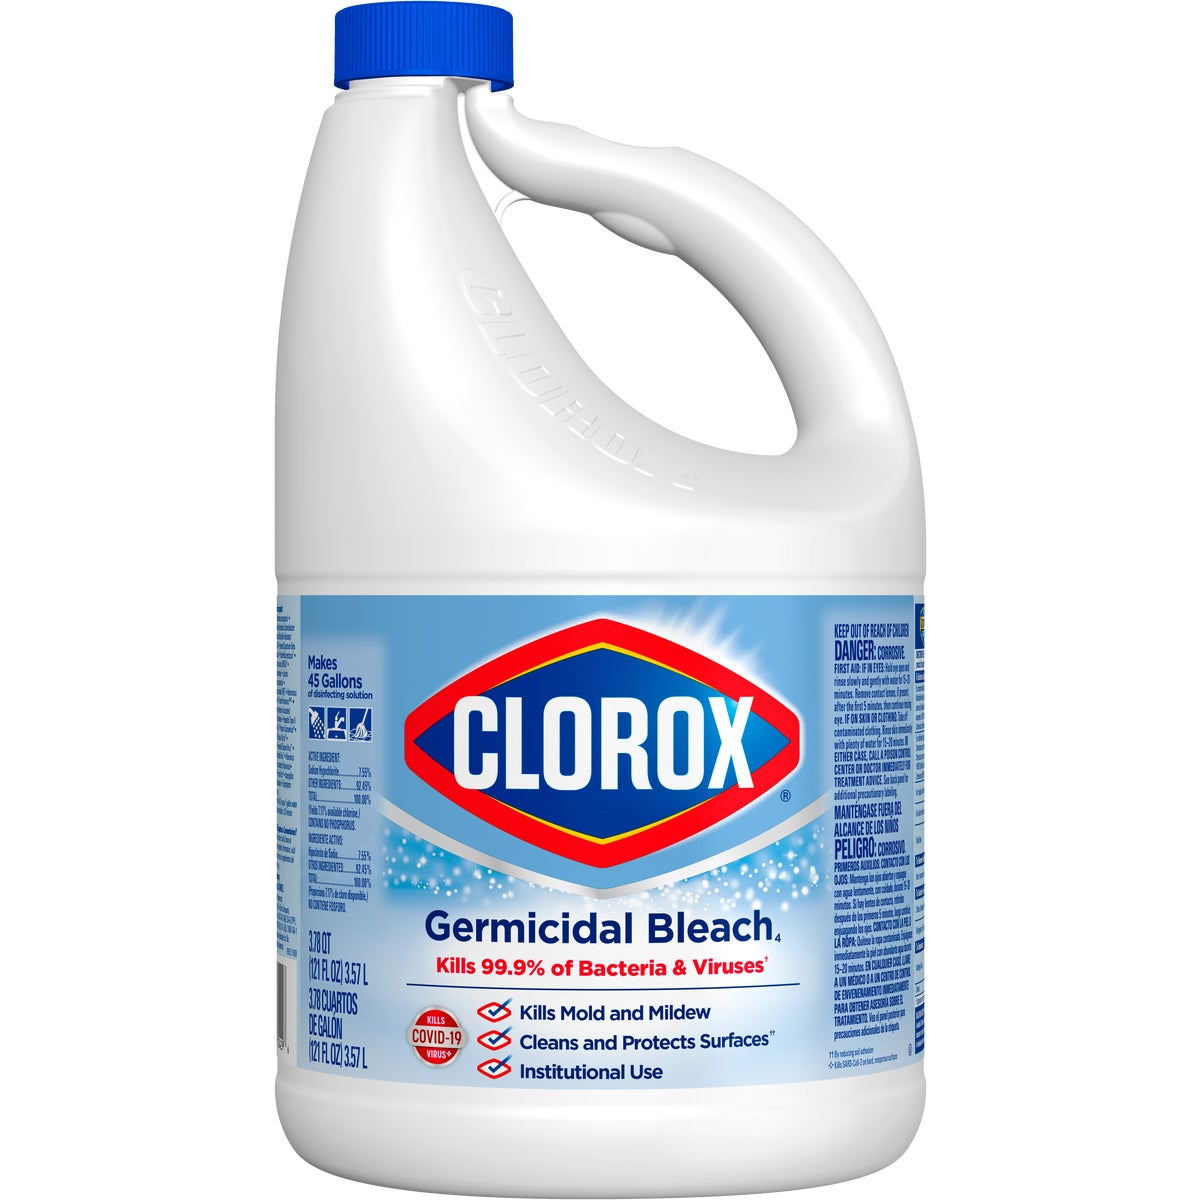 Clorox 121 Oz. Concentrated Germicidal Bleach